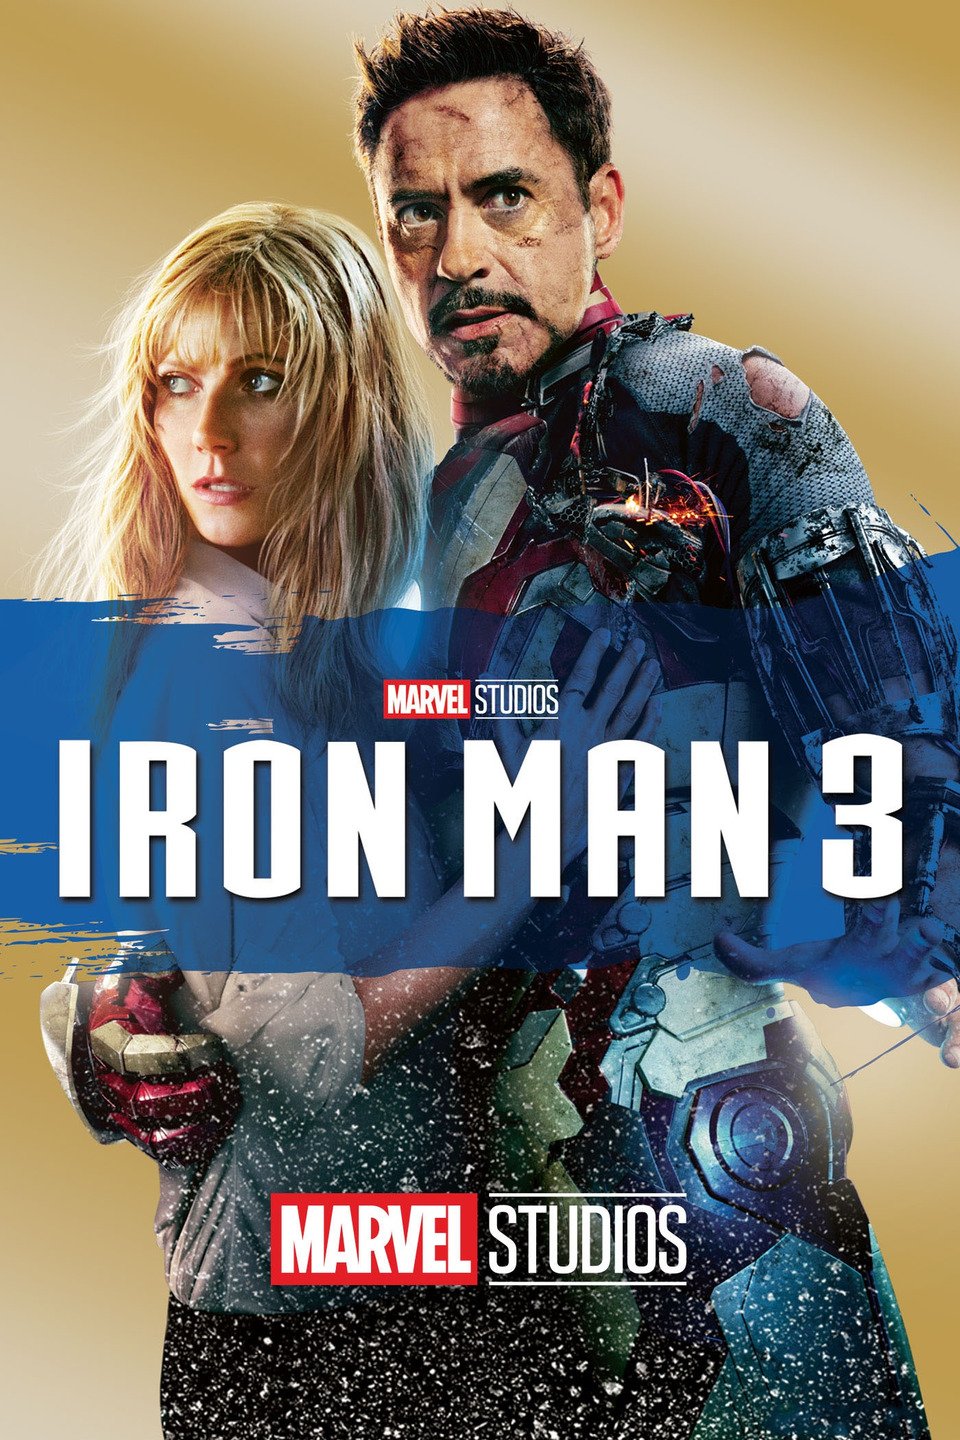 [MINI Super-HQ] Iron Man 3 (2013) มหาประลัยคนเกราะเหล็ก ภาค 3 [1080P] [พากย์ไทย 5.1 + อังกฤษ DTS] [BluRay.DTS.x264] [บรรยายไทย + อังกฤษ] [เสียงไทย + ซับไทย] [ONE2UP]